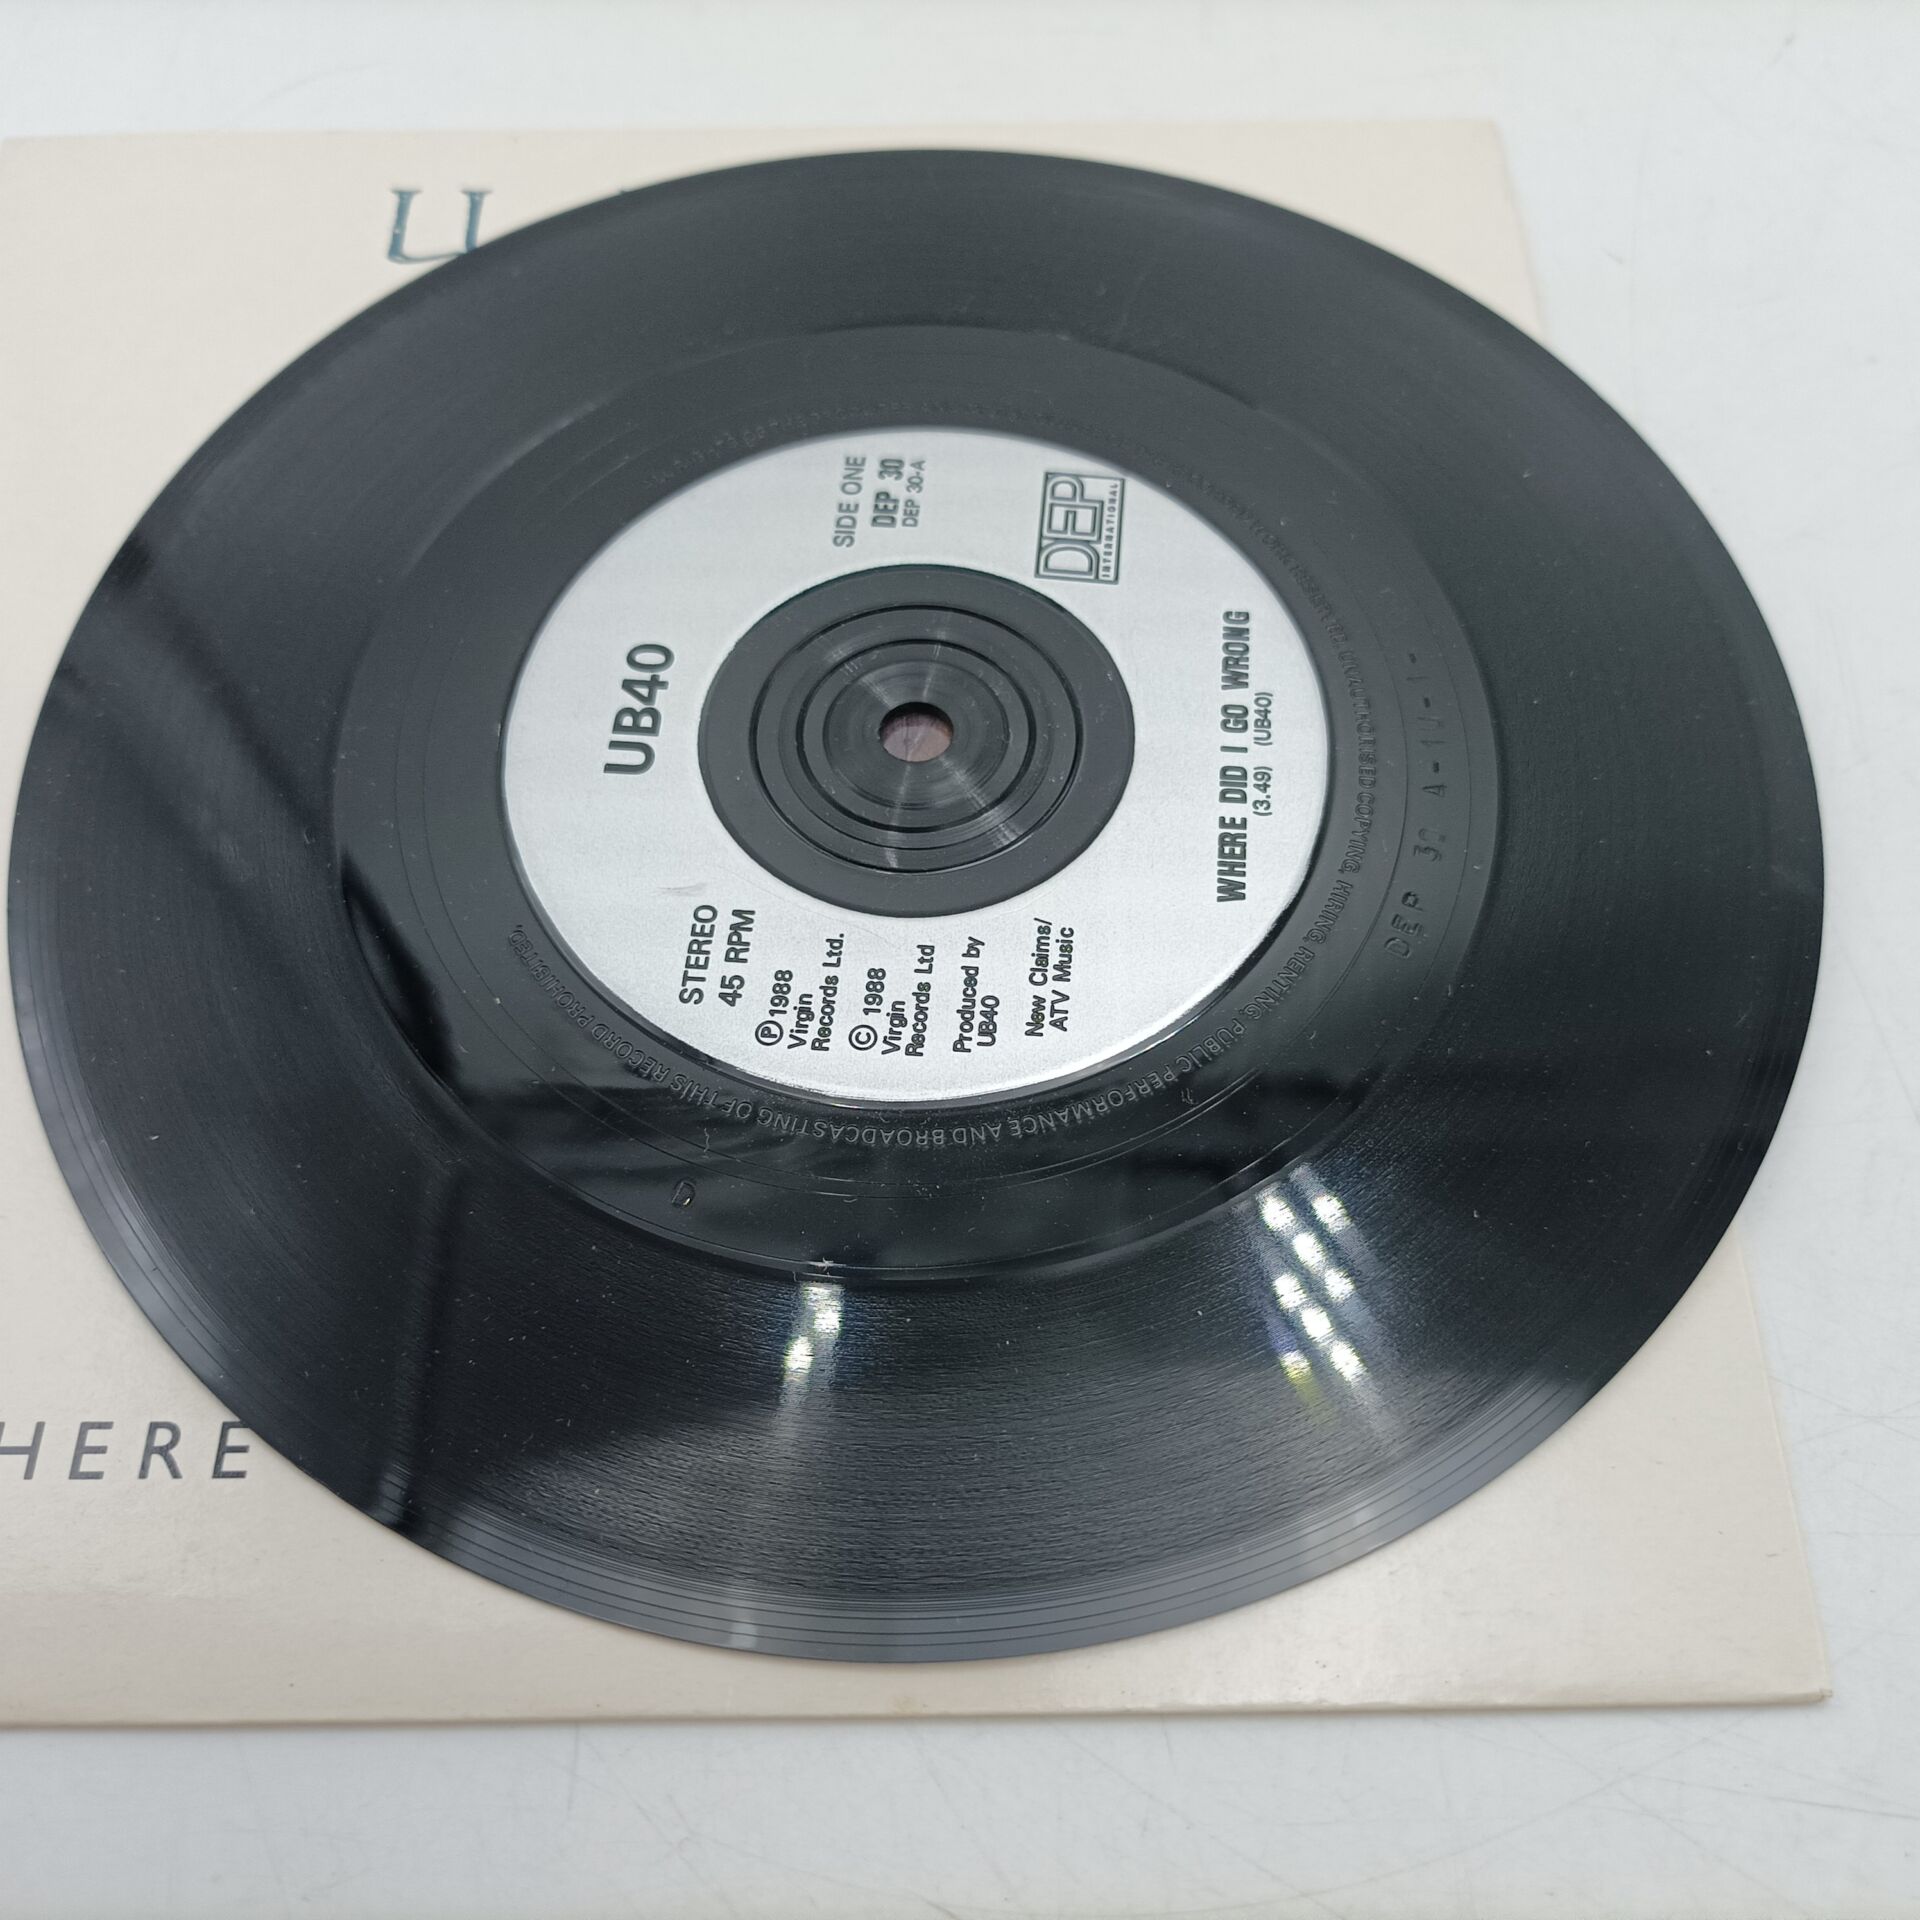 UB40 – Where Did I Go Wrong (1988) 7″ Single [Ex+] Virgin Records